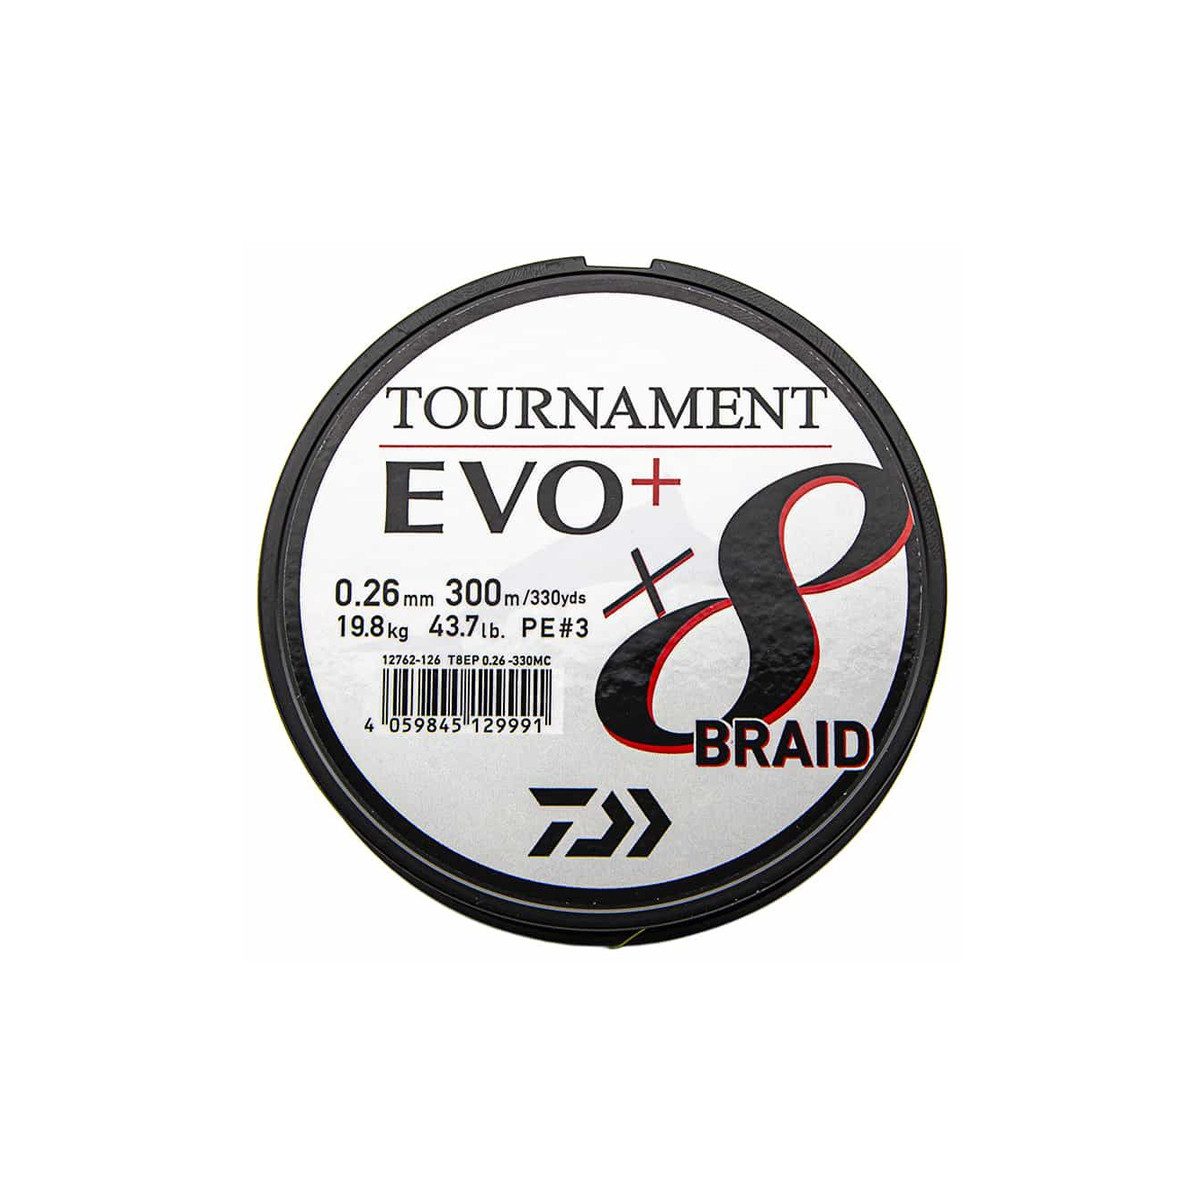 DAIWA TOURNAMENT EVO+ X8 BRAID 300M MULTICOLOR